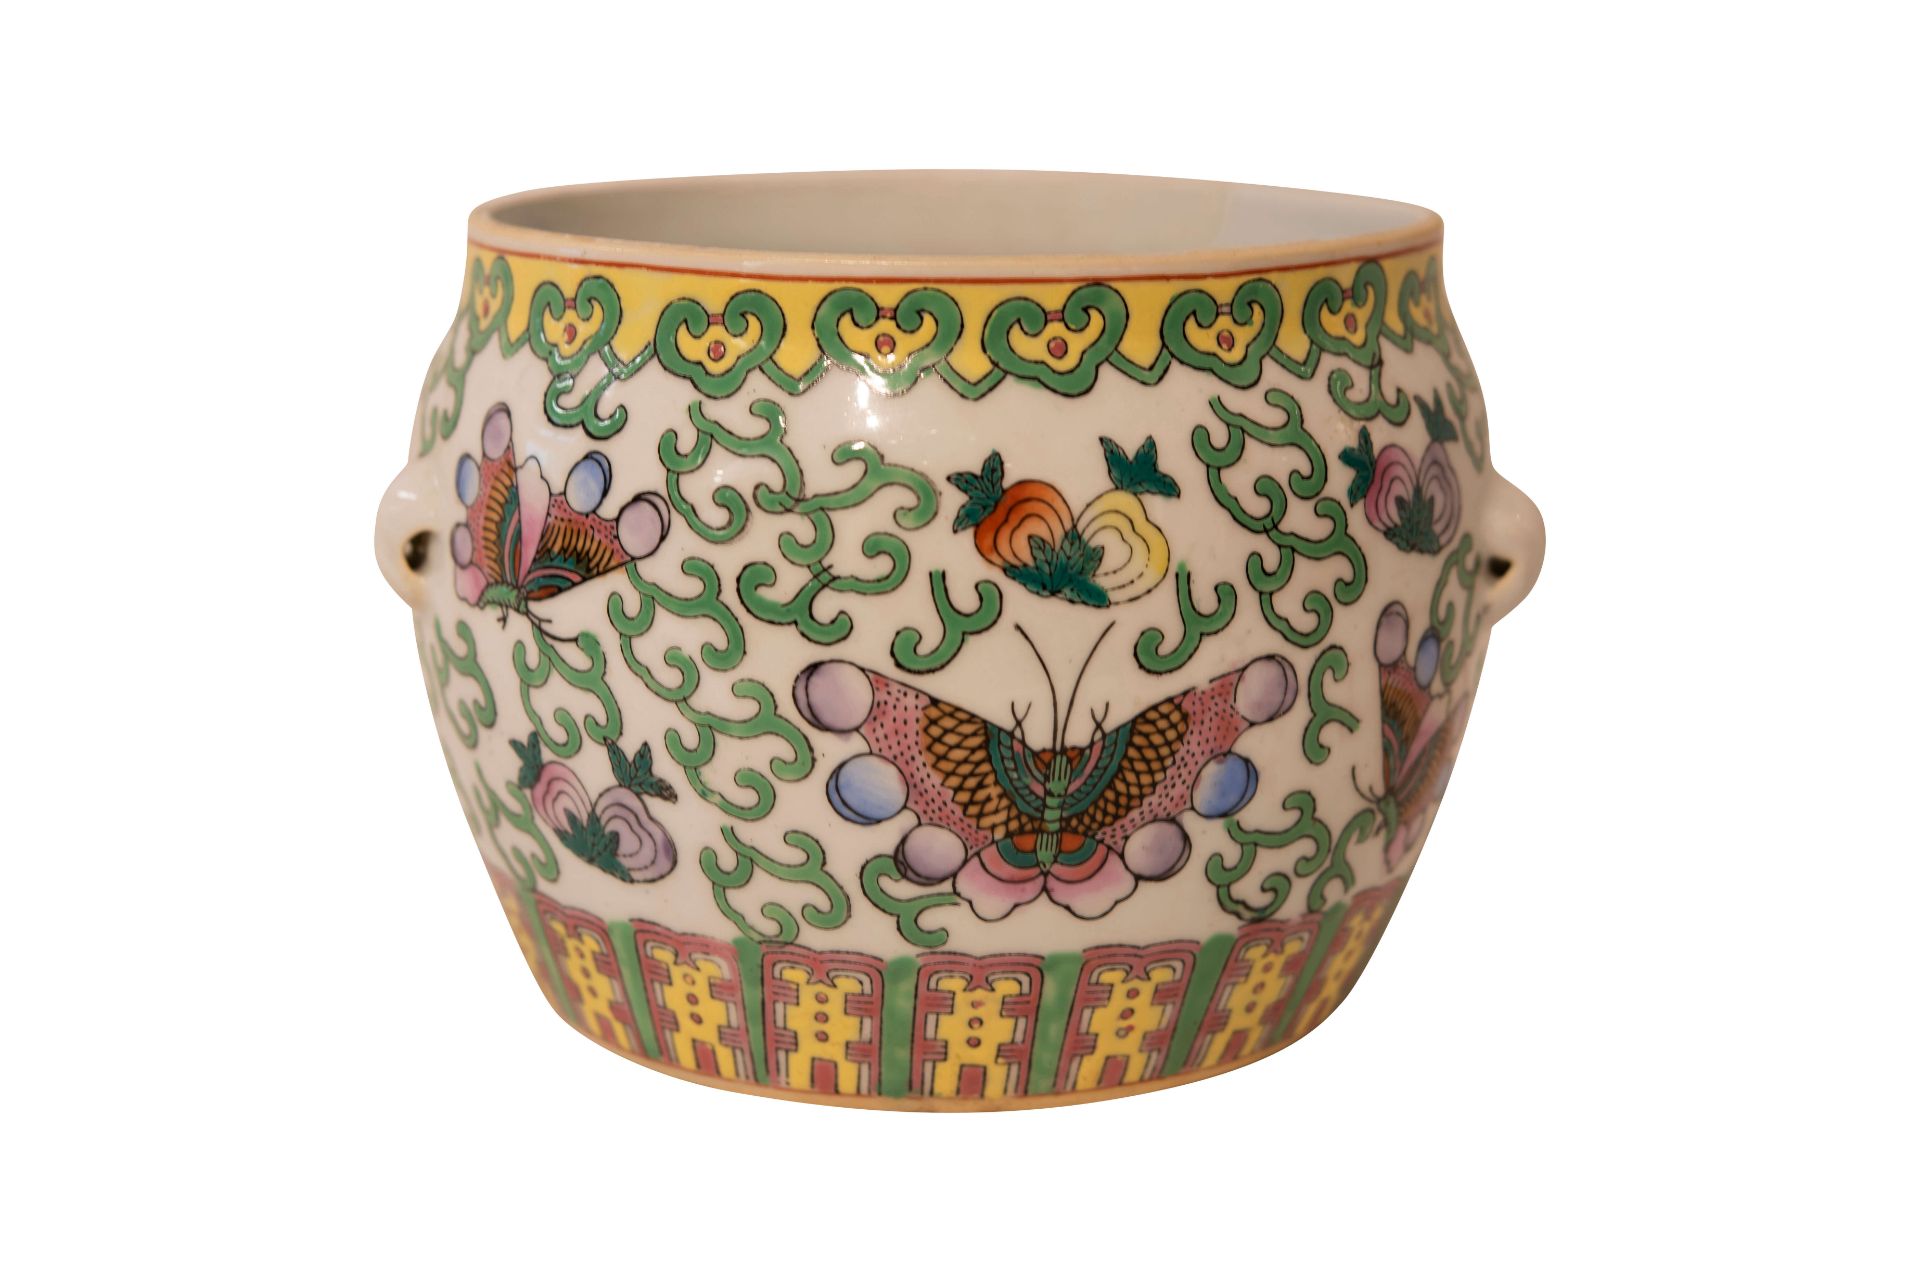 Handbemalter bunter Asiatischer Keramik Topf | Colorful Hand Painted Asian Ceramic Pot - Image 2 of 5